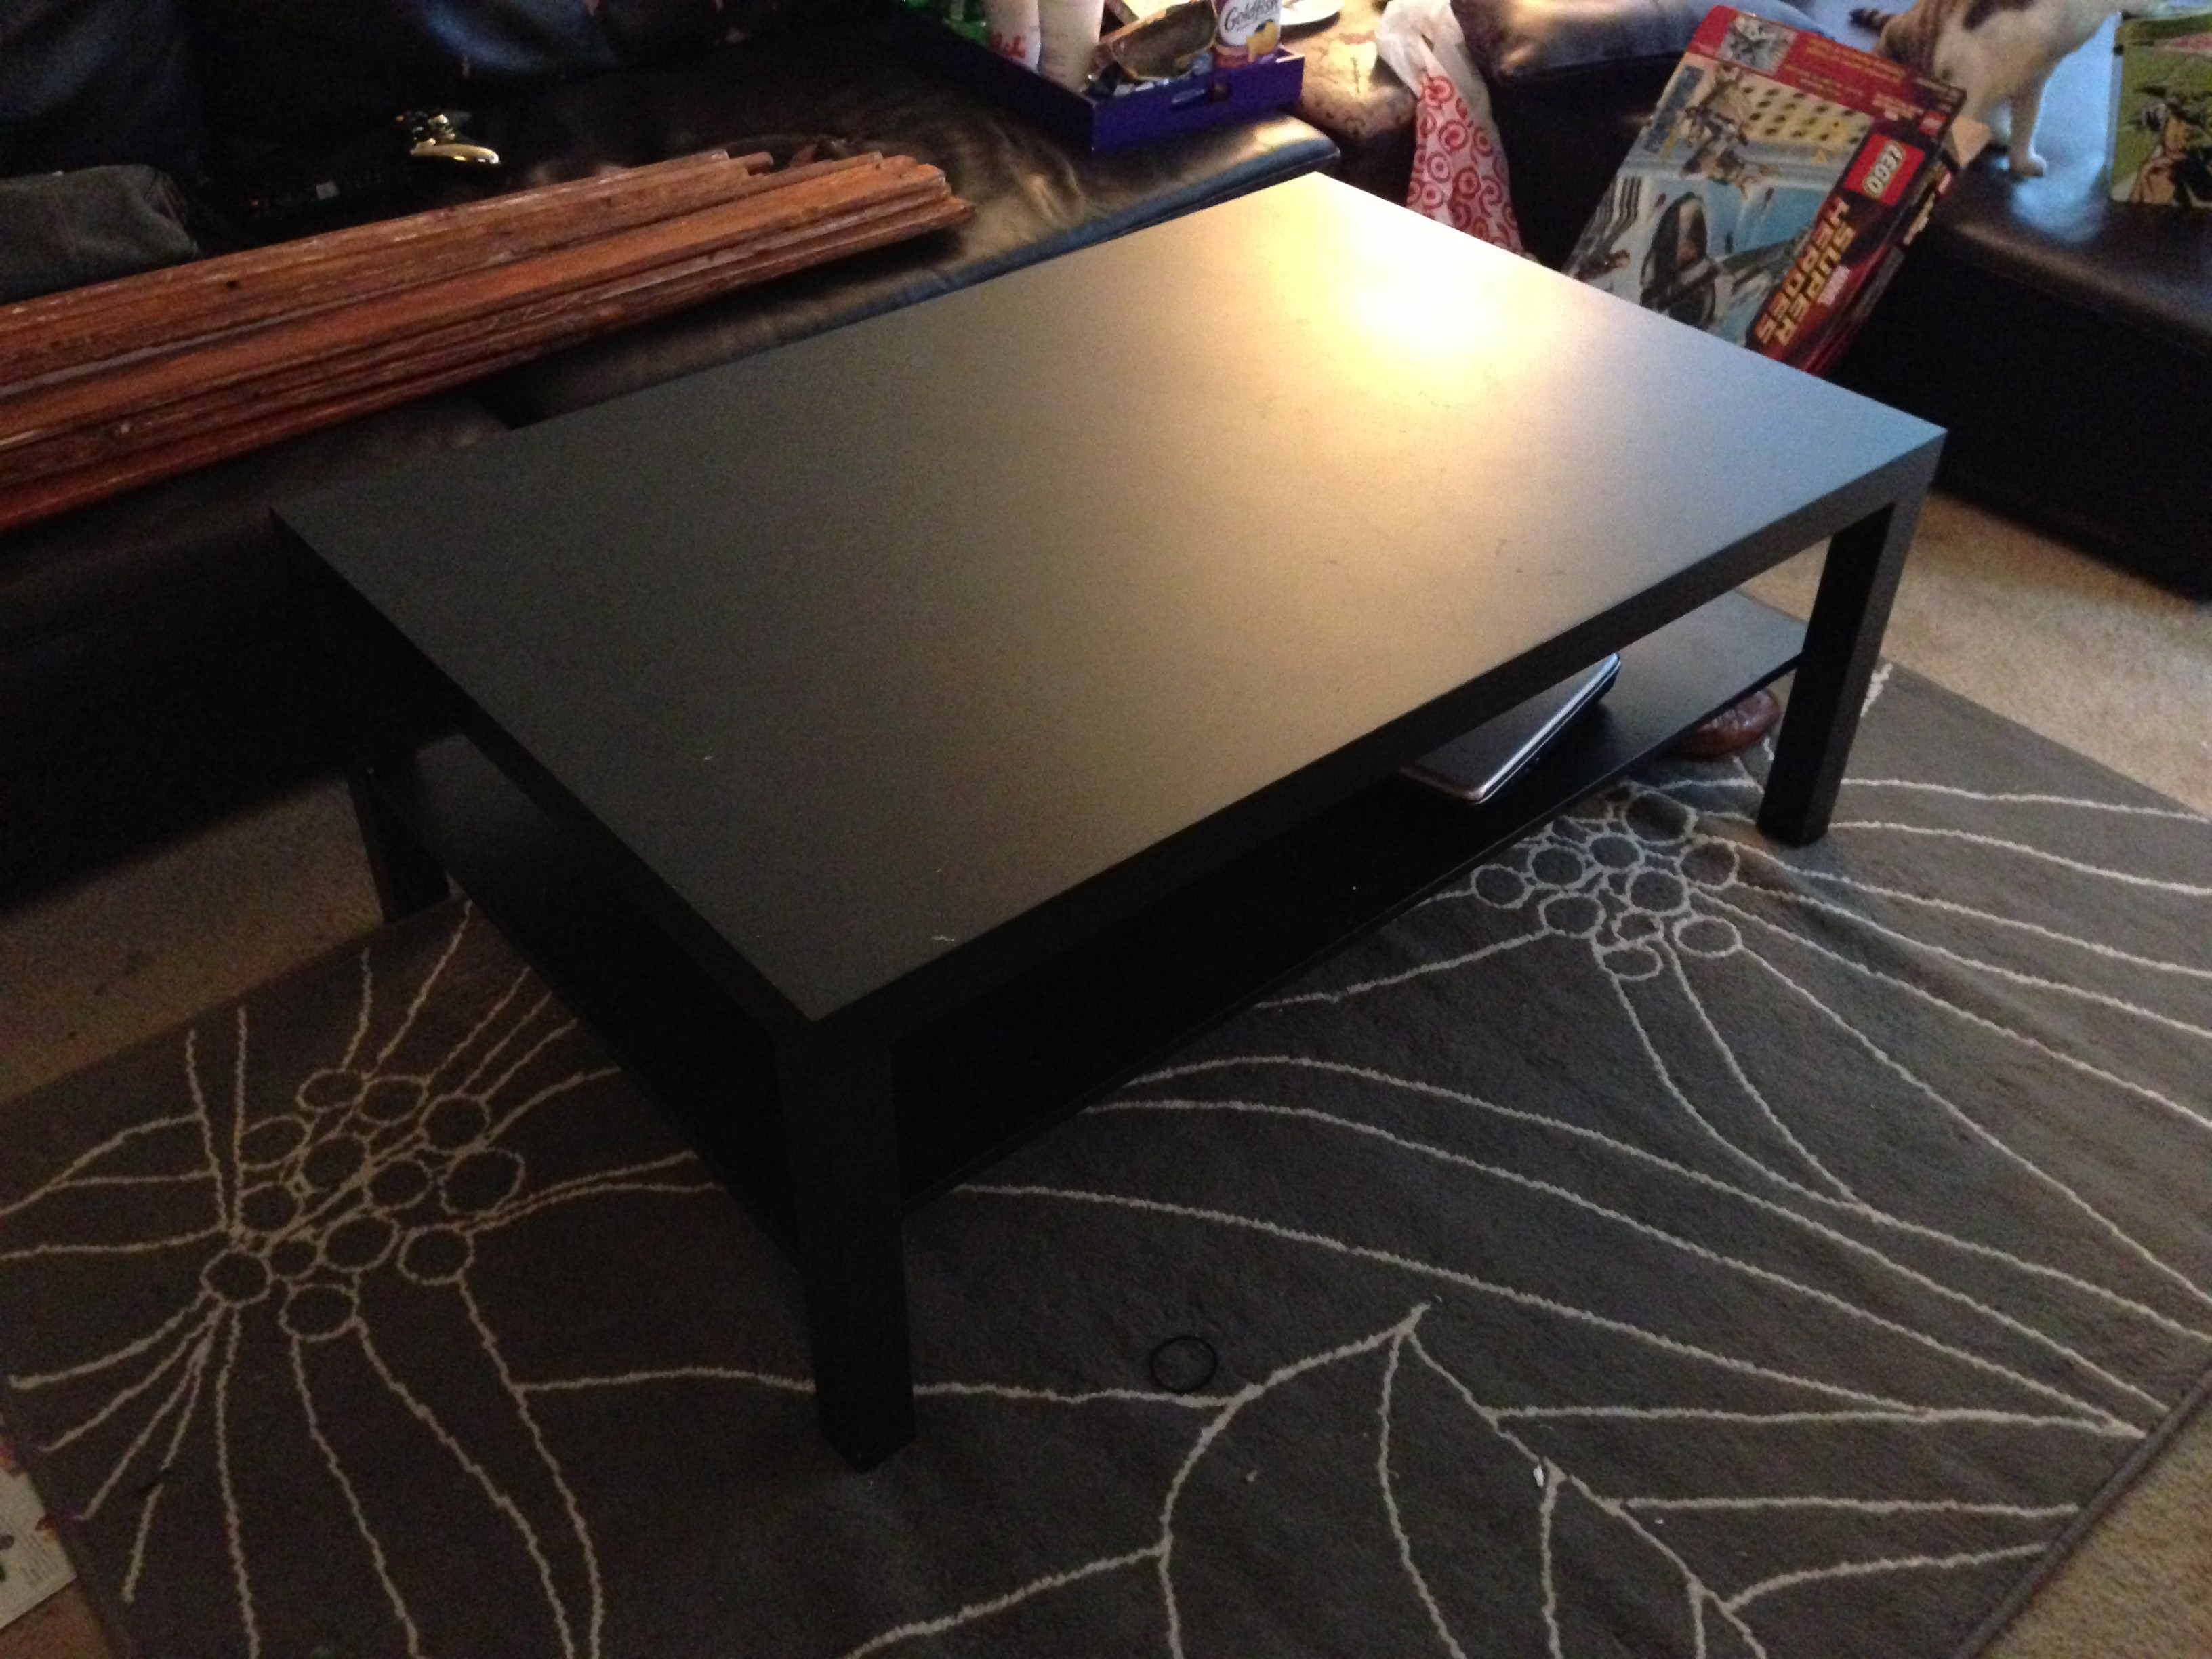 Start with the big Ikea coffee table